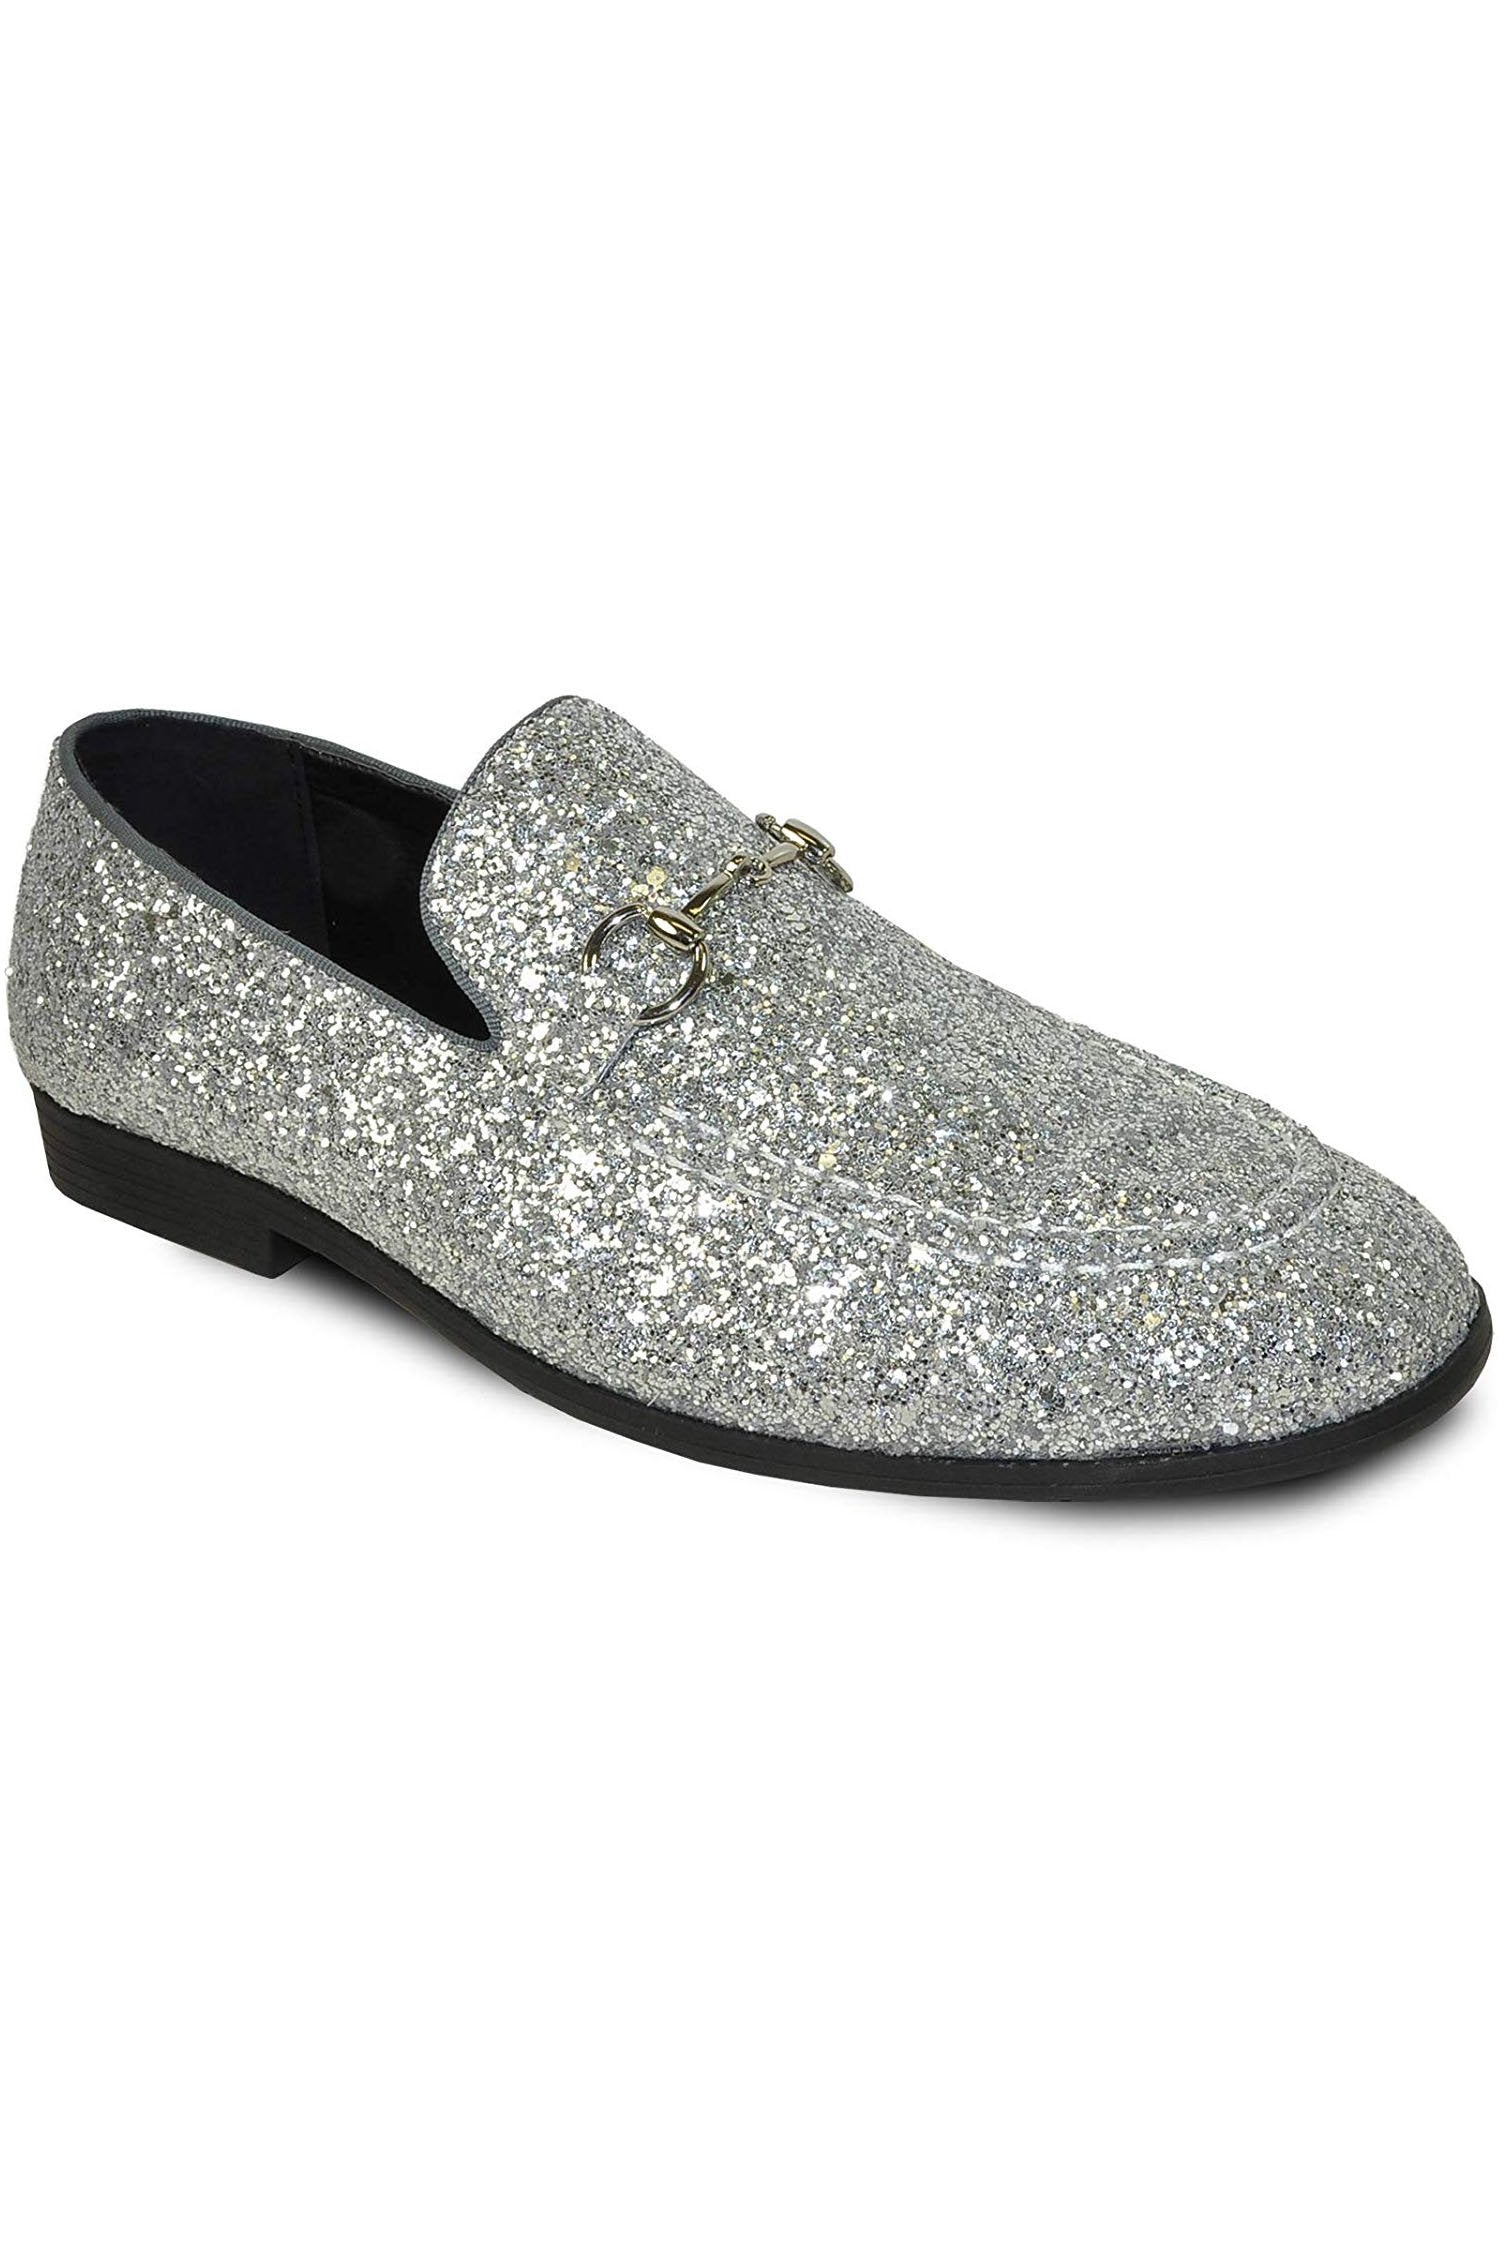 Bravo "Glitter" Silver Shoes